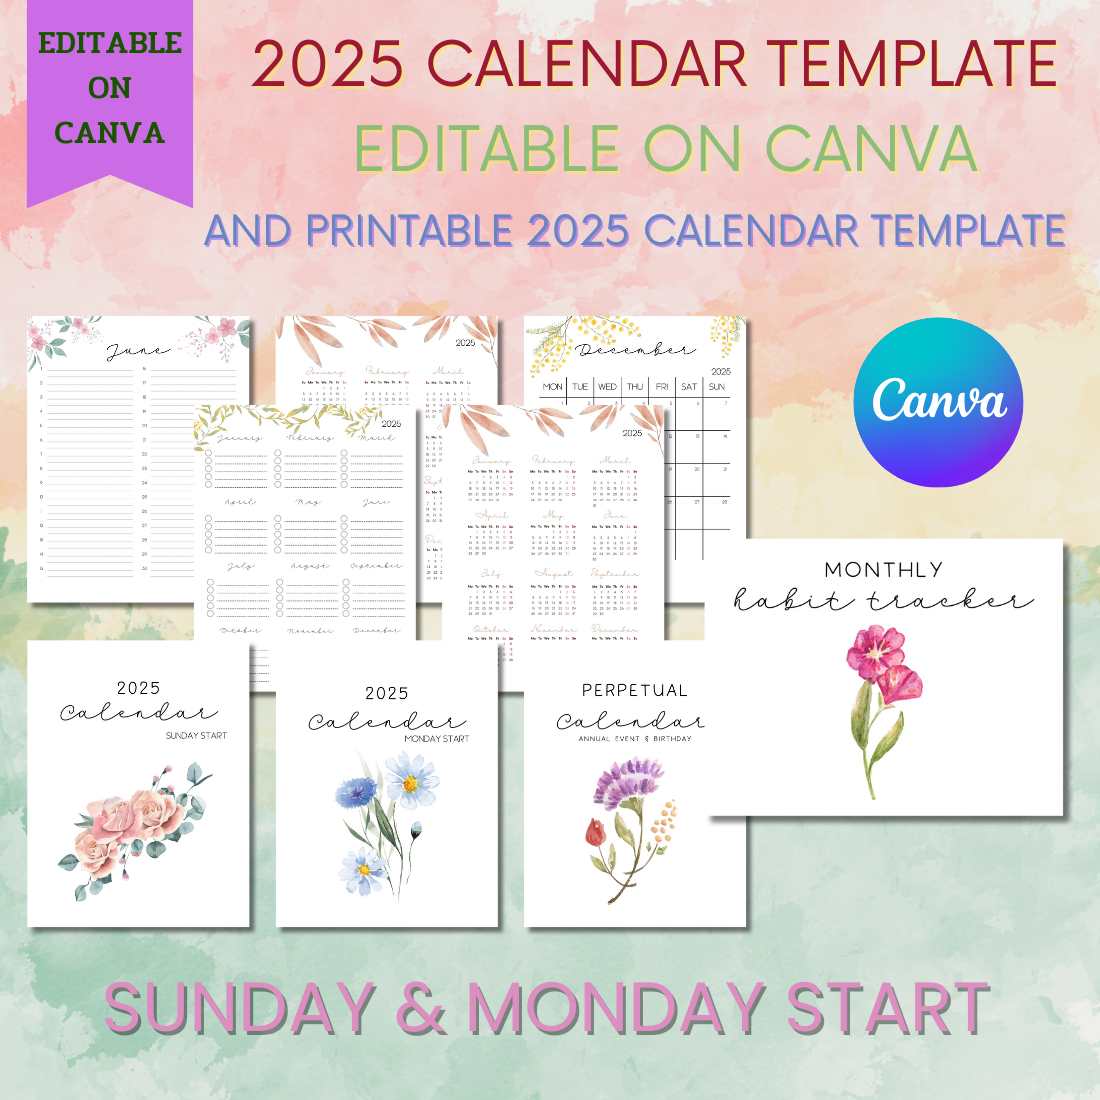 2025 Calendar Template - Editable on Canva cover image.